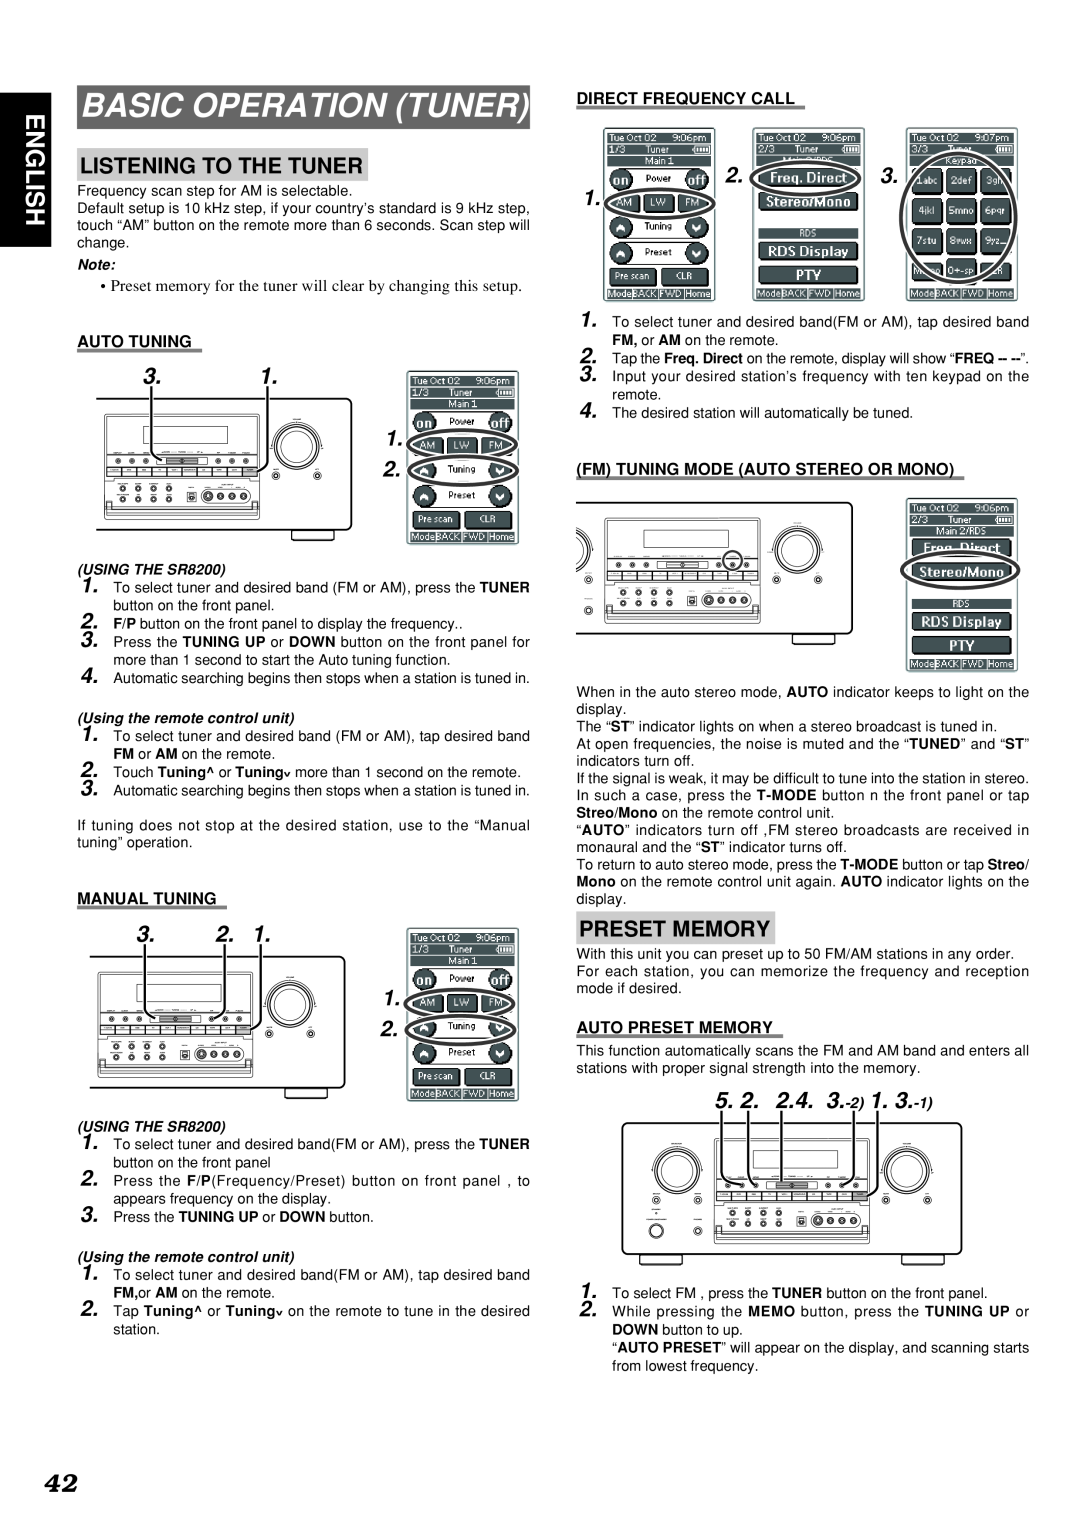 Marantz SR8200 Basic Operation Tuner, English, 3.2, 5. 2. 2.4. 3.-2 1, Direct Frequency Call, Auto Tuning, Manual Tuning 